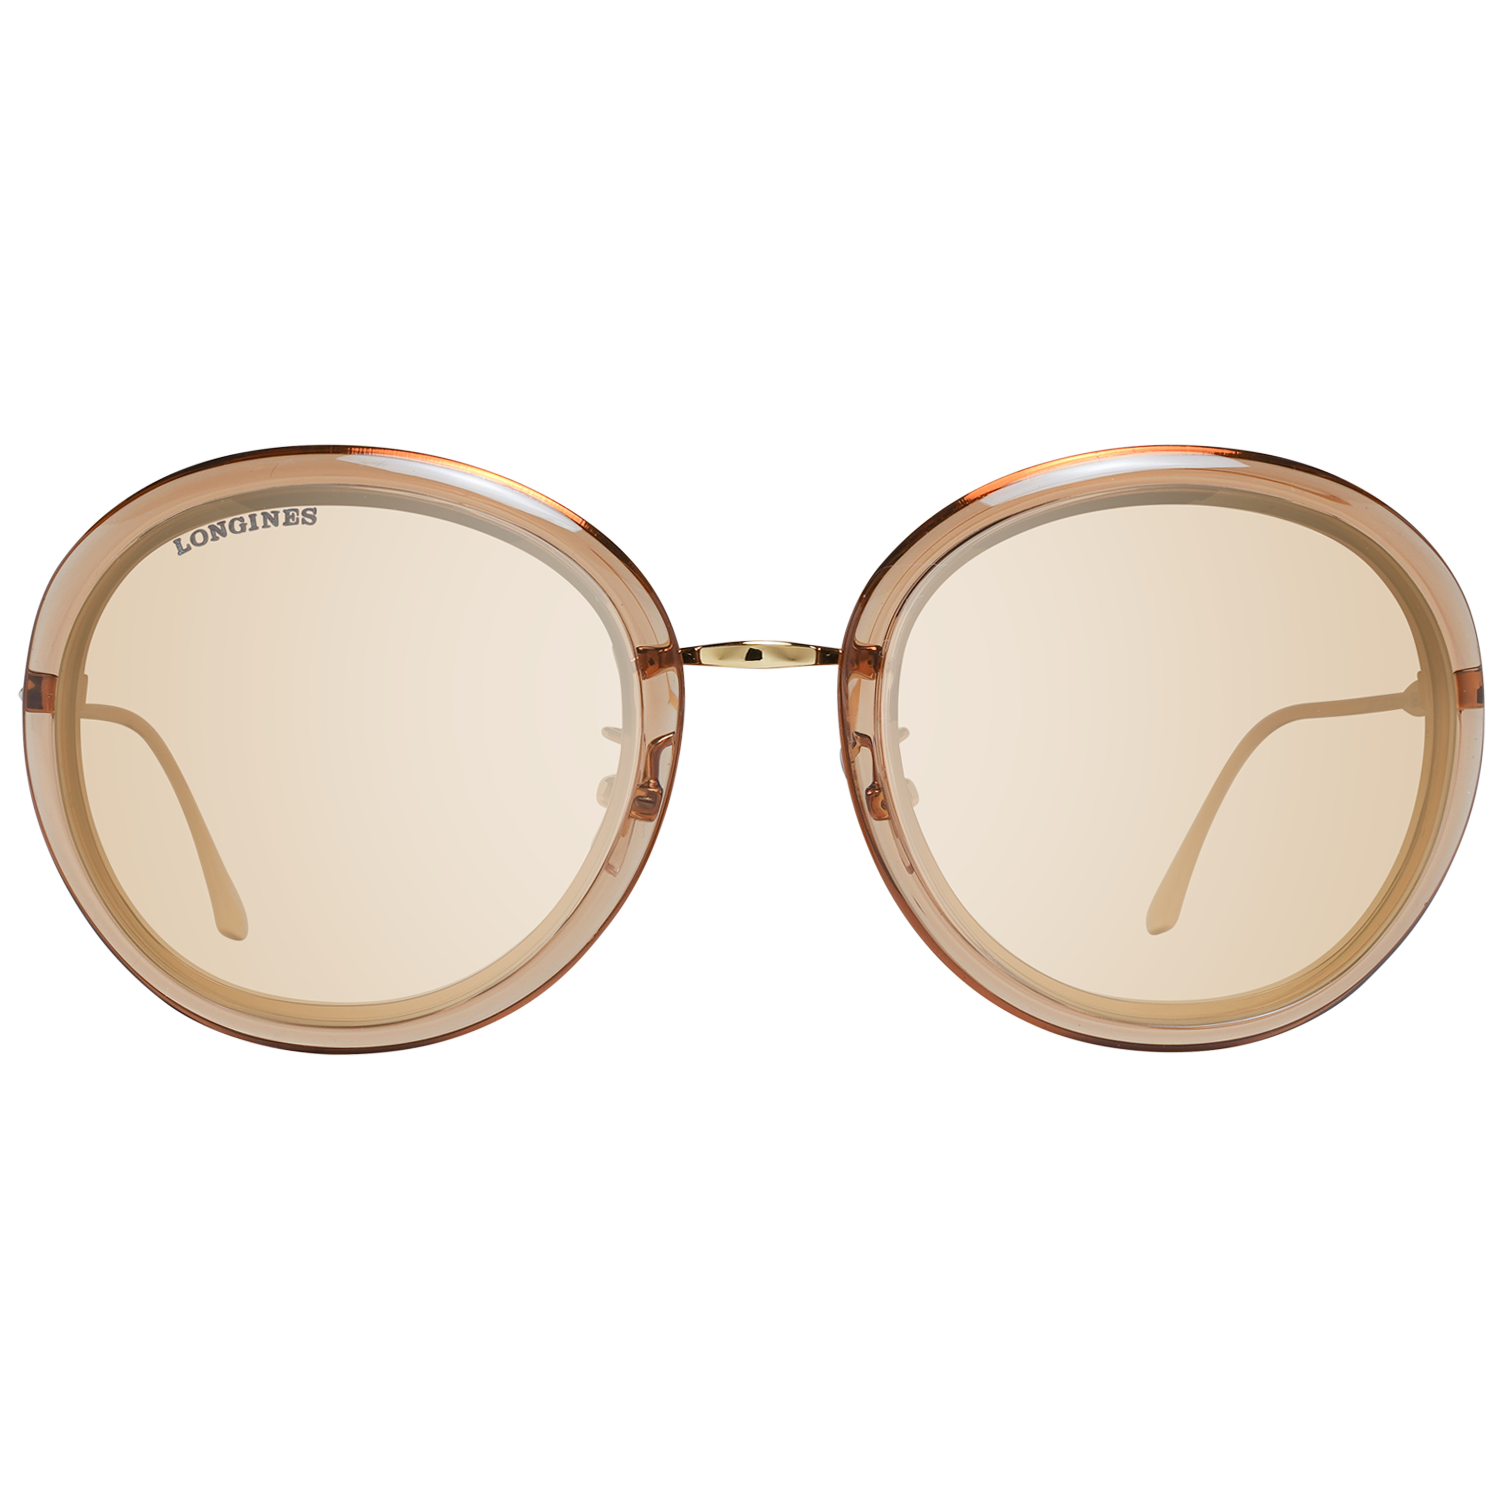 Longines Sunglasses Longines Sunglasses LG0011-H 45G 56 Mirrored Eyeglasses Eyewear UK USA Australia 